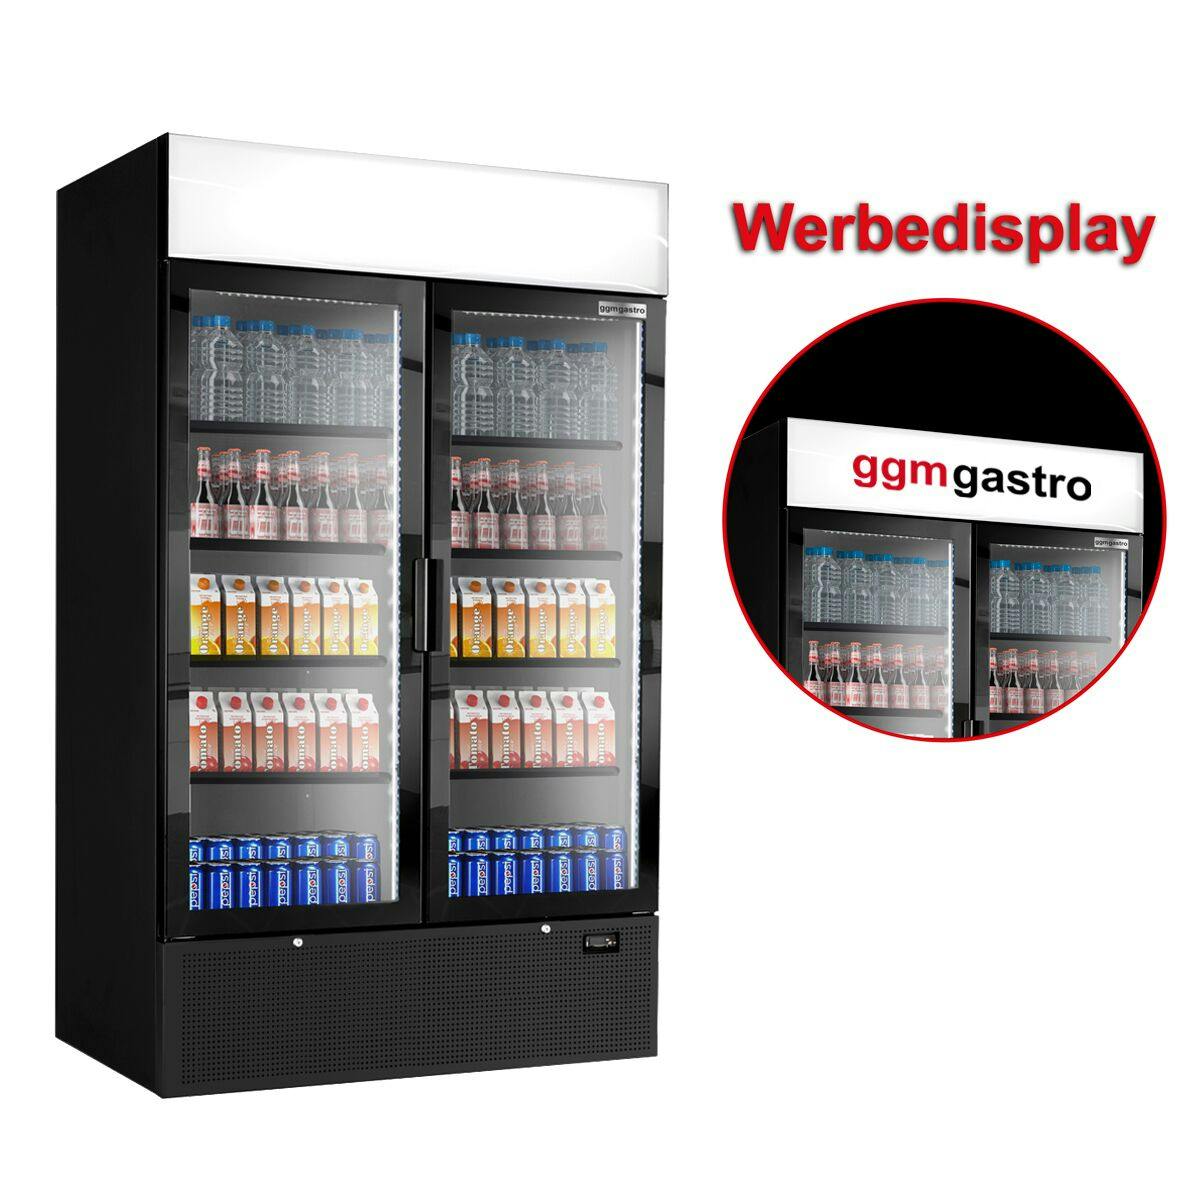 Beverage refrigerator - 1048 litres - frameless design - with advertising display